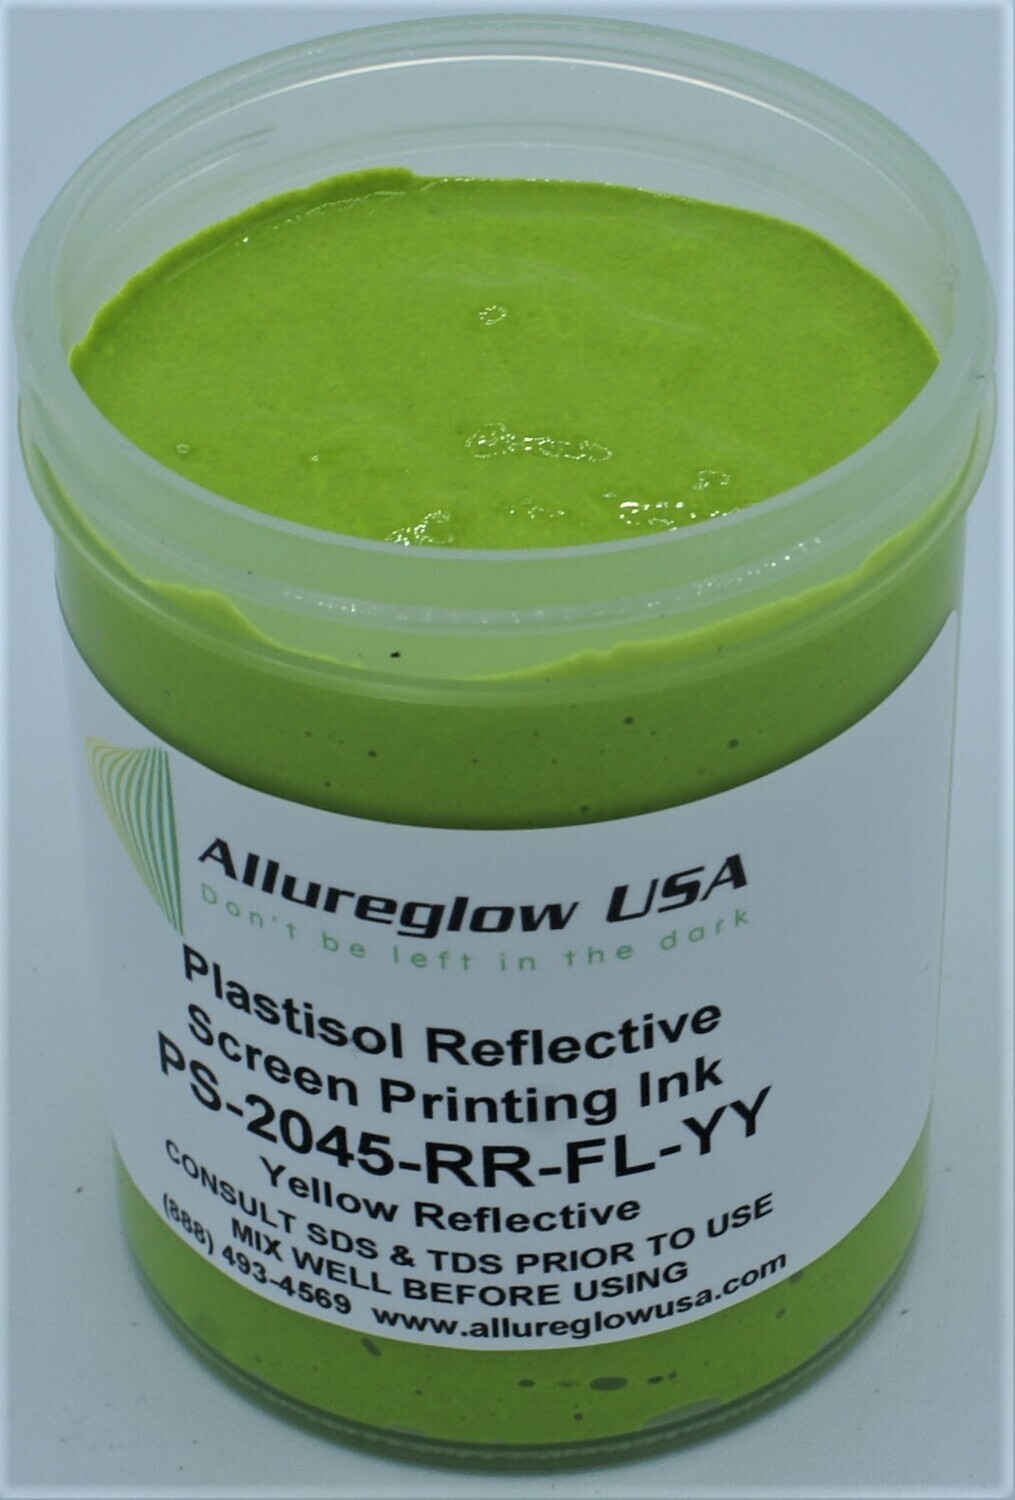 PS-2045-RR-FL-YY-GL PLASTISOL FLUORESCENT YELLOW REFLECTIVE INK GALLON